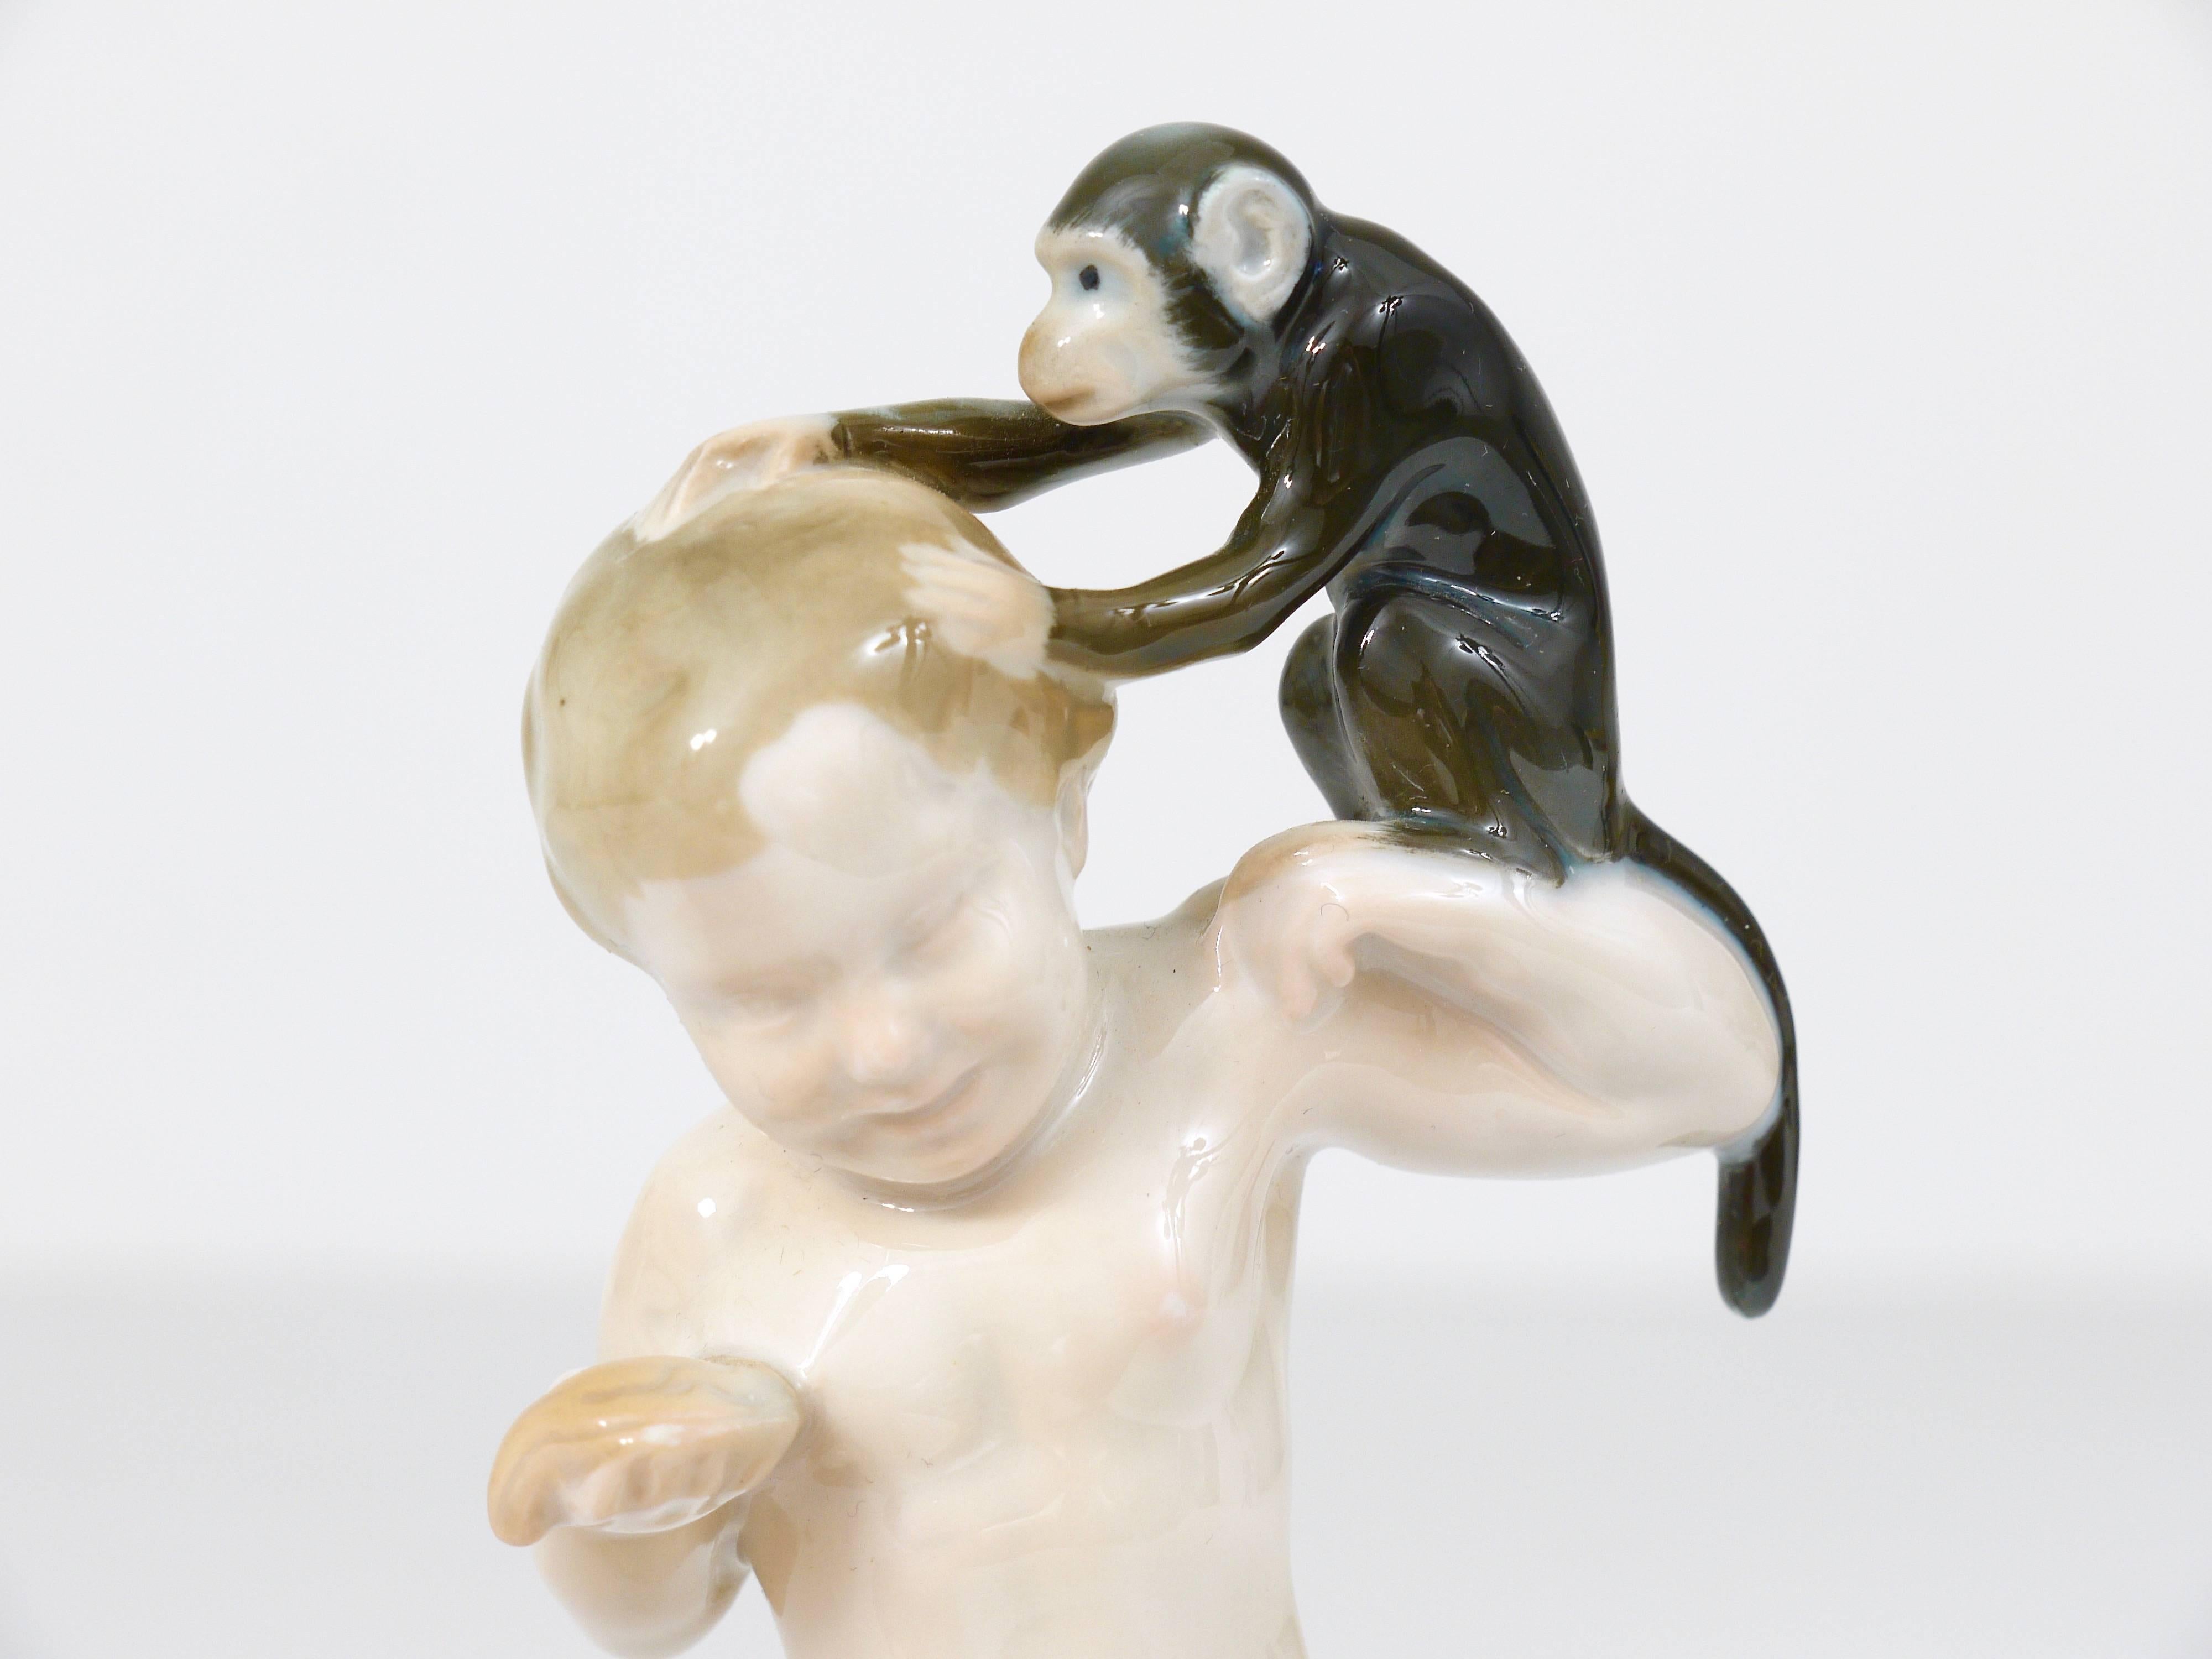 1910s Rosenthal Putto & Monkey Porcelain Sculpture by Ferdinand Liebermann For Sale 2